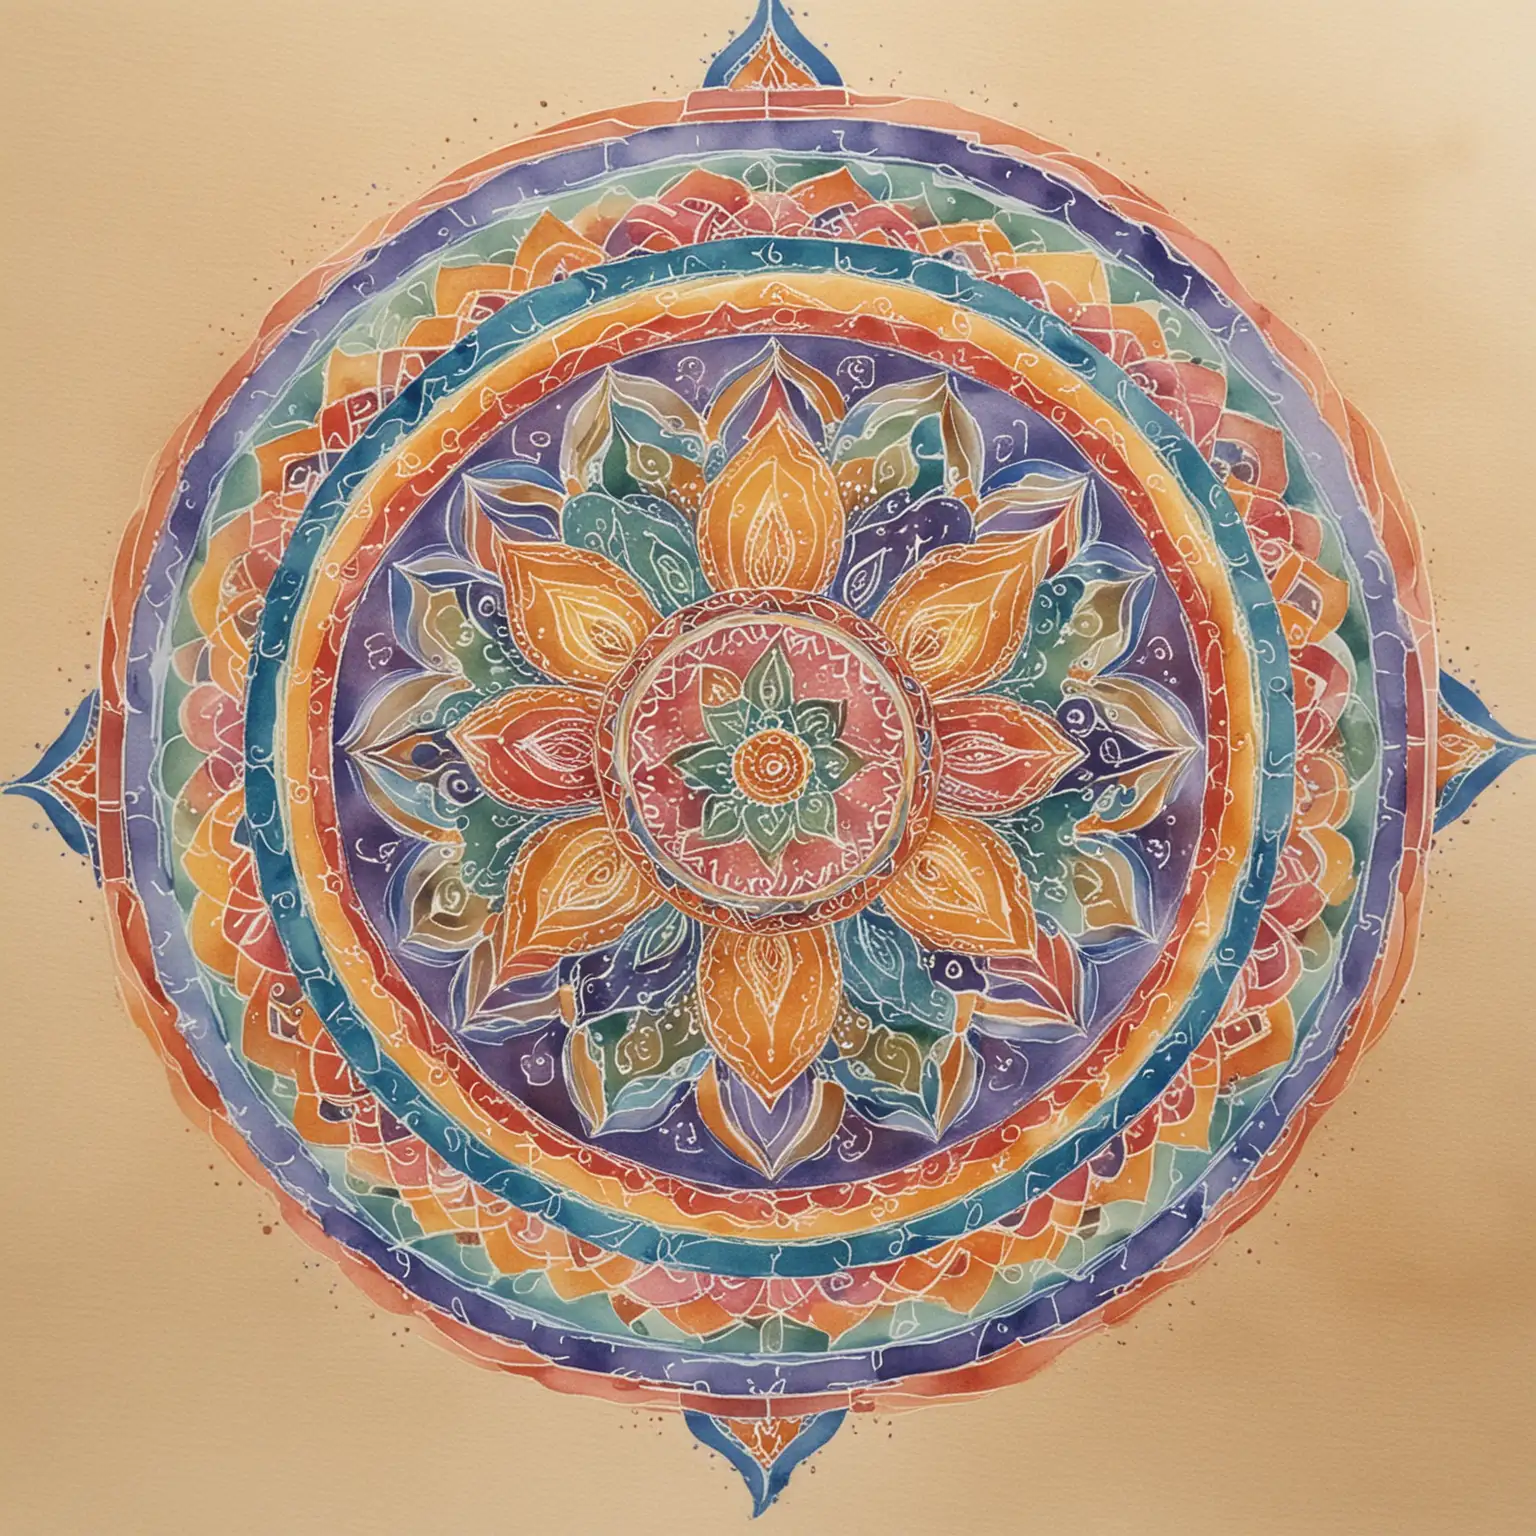 watercolor of a colorful sand mandala